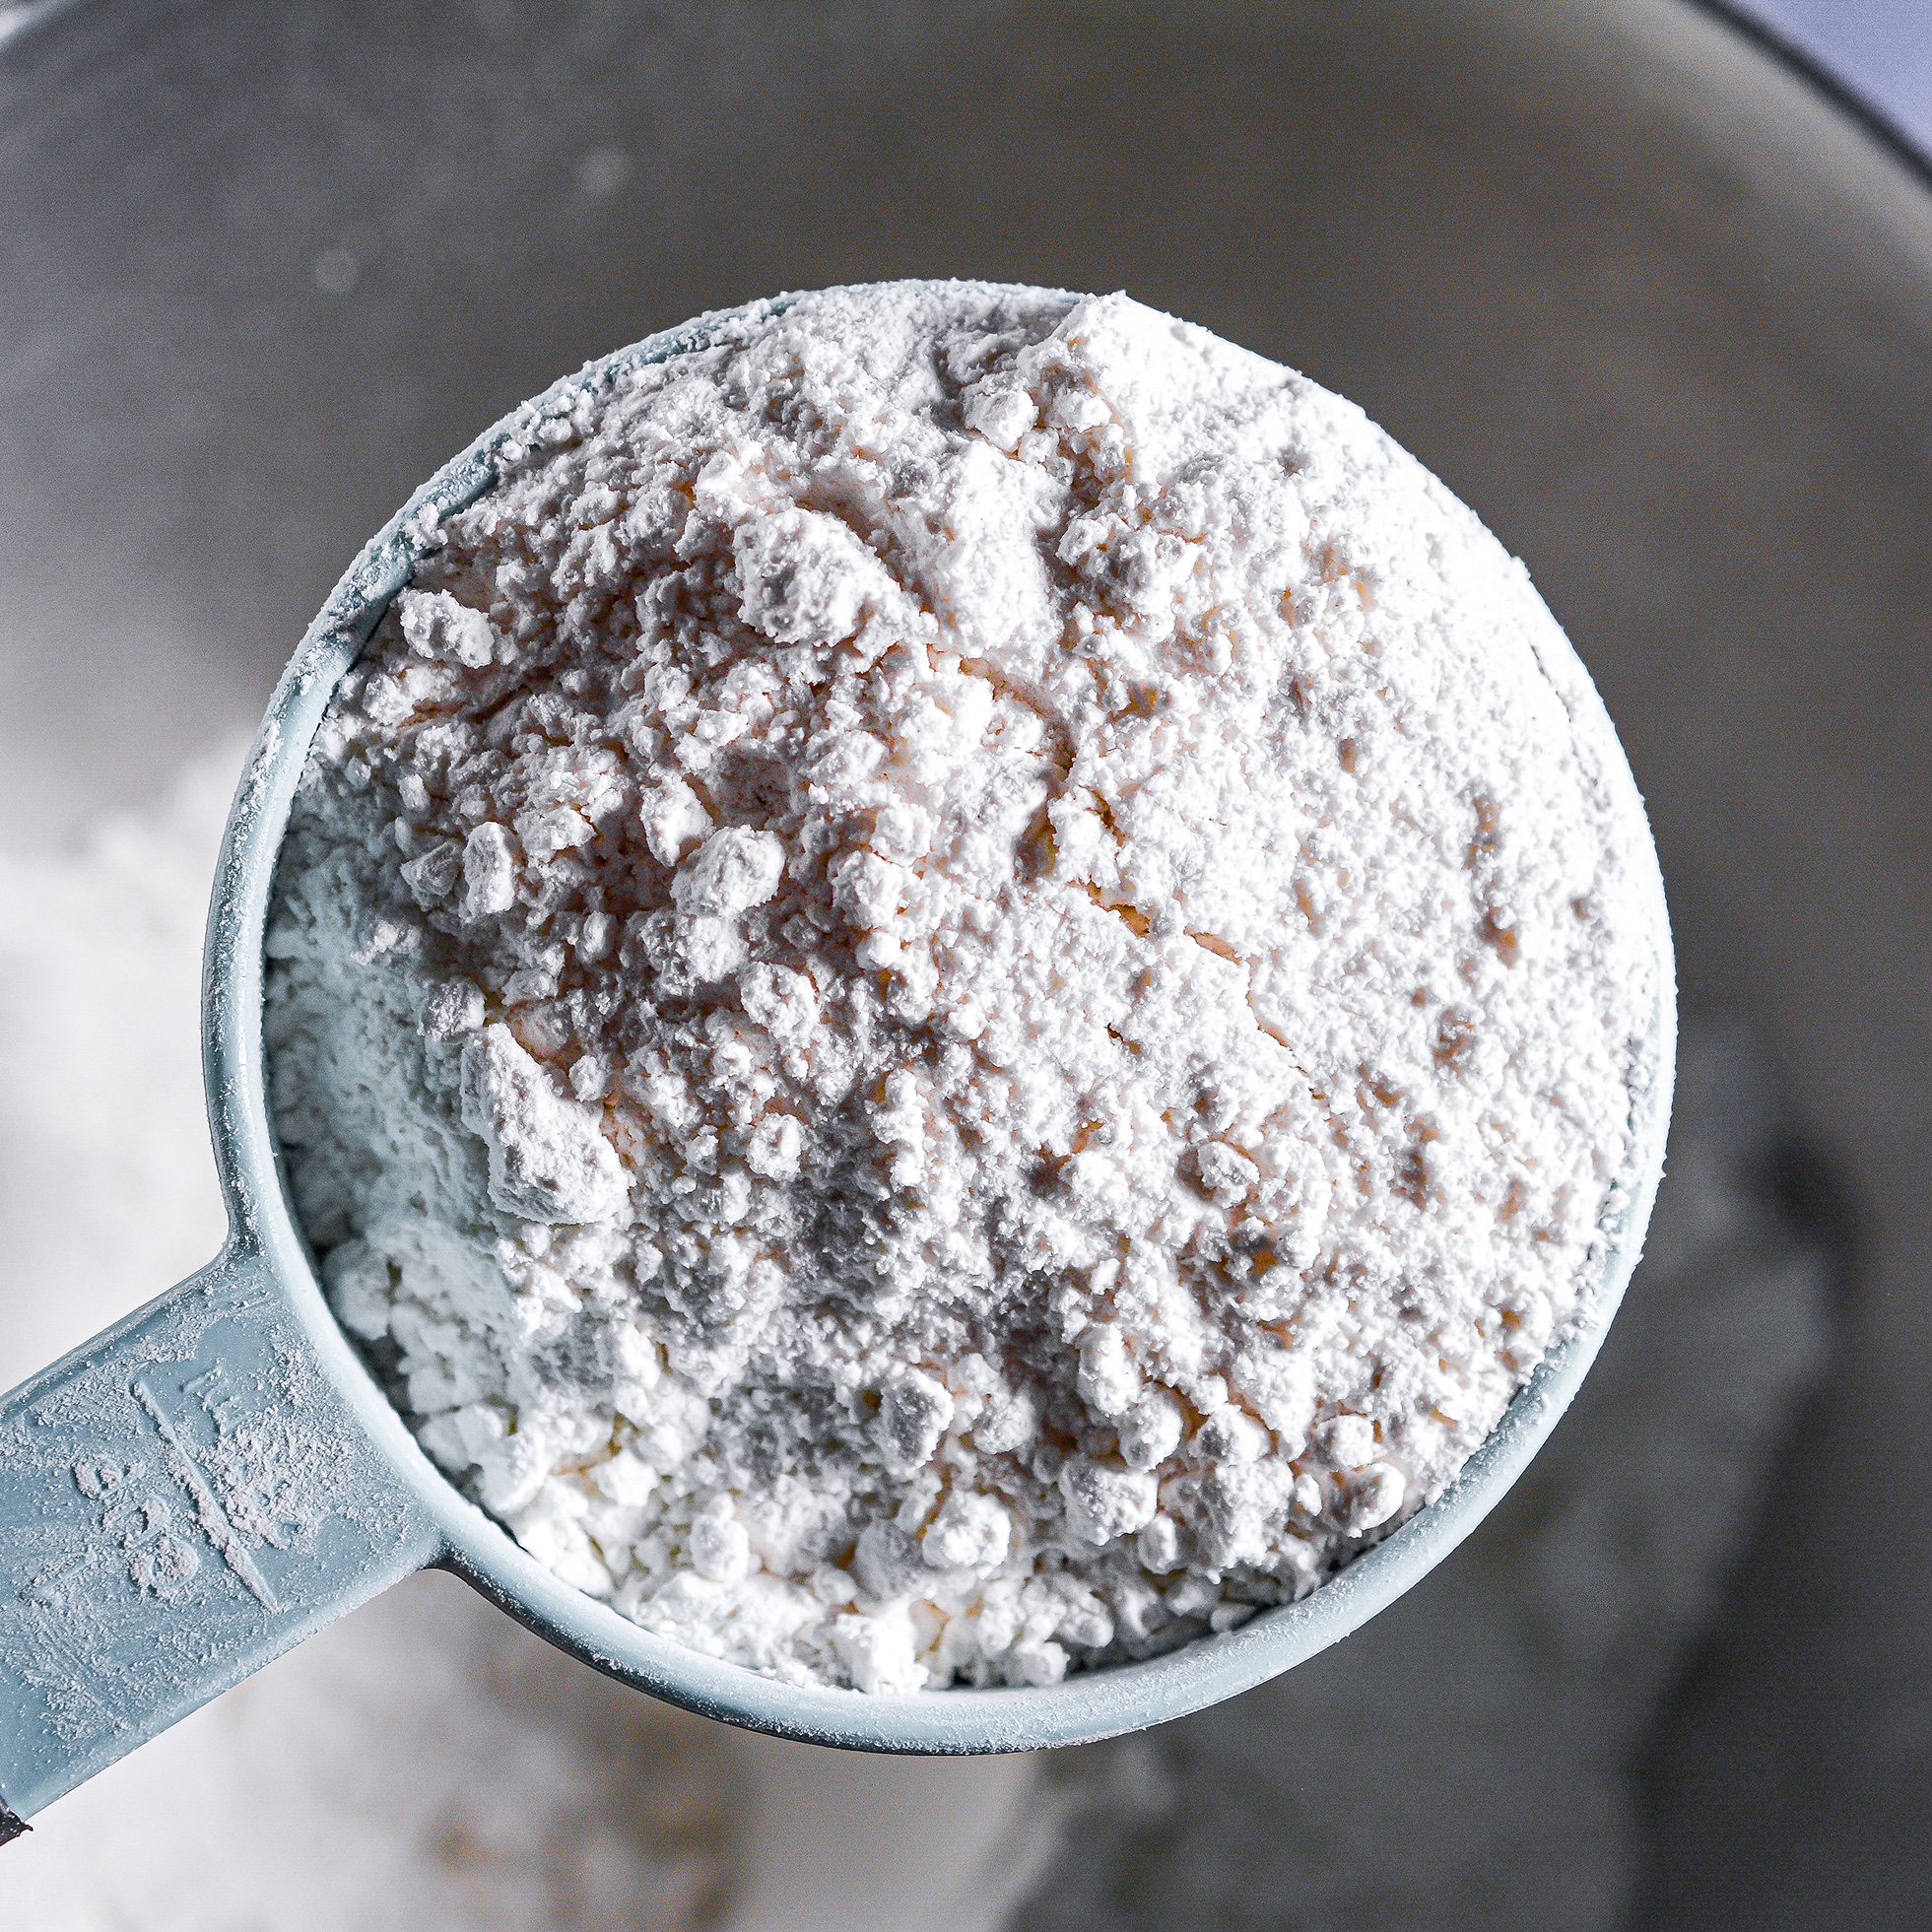 All-purpose flour